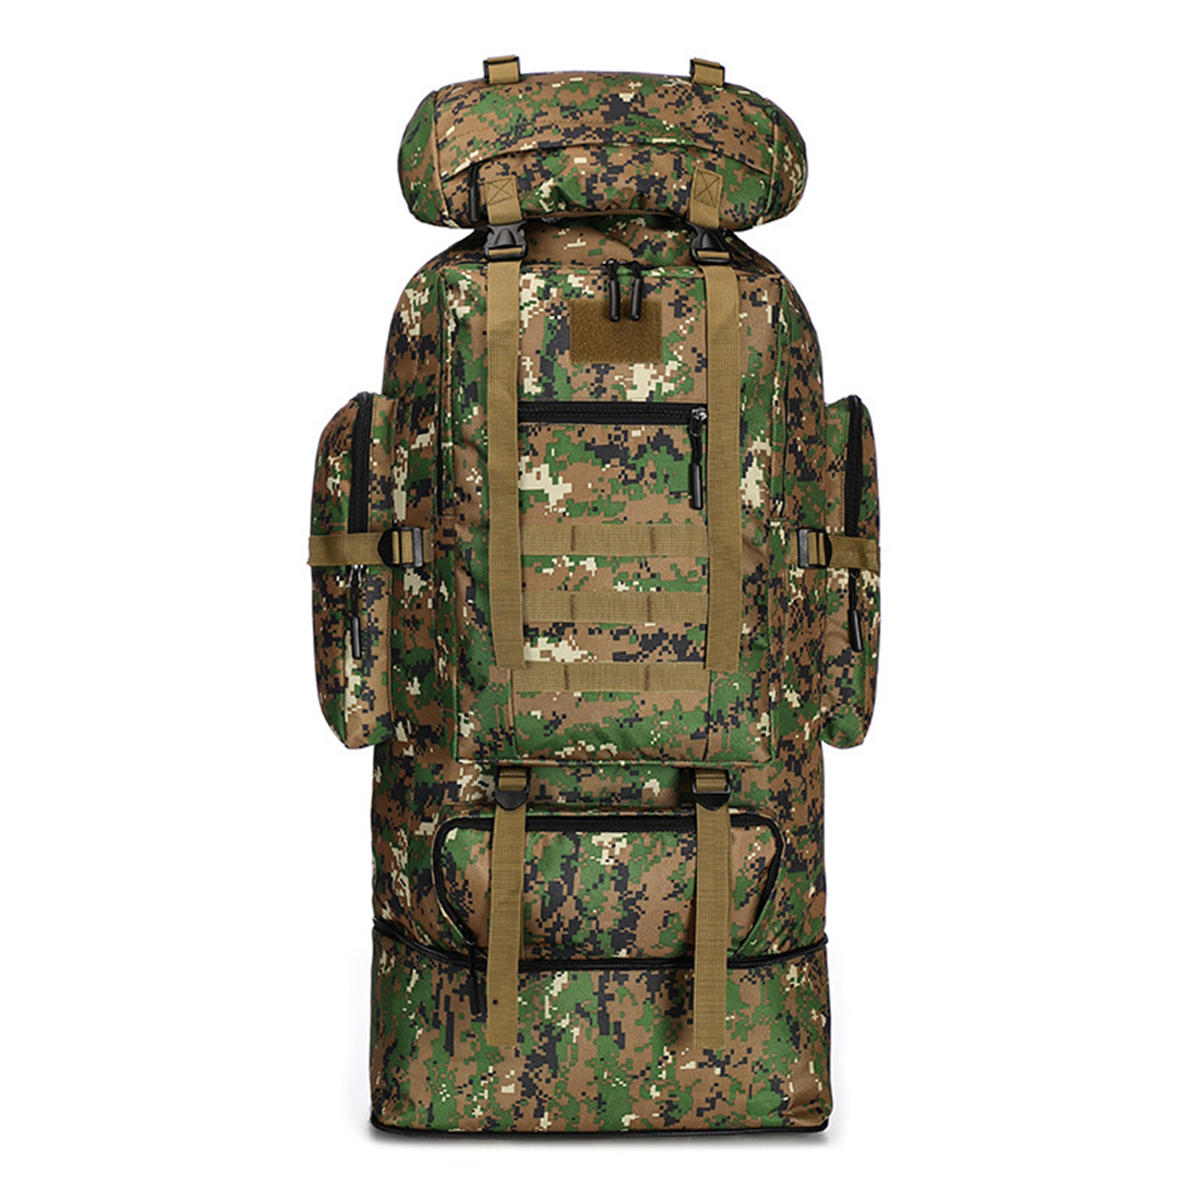 100L Large Capacity Military Tactical Backpack Outdoor Hiking Climbing Camping Bag Travel Rucksack